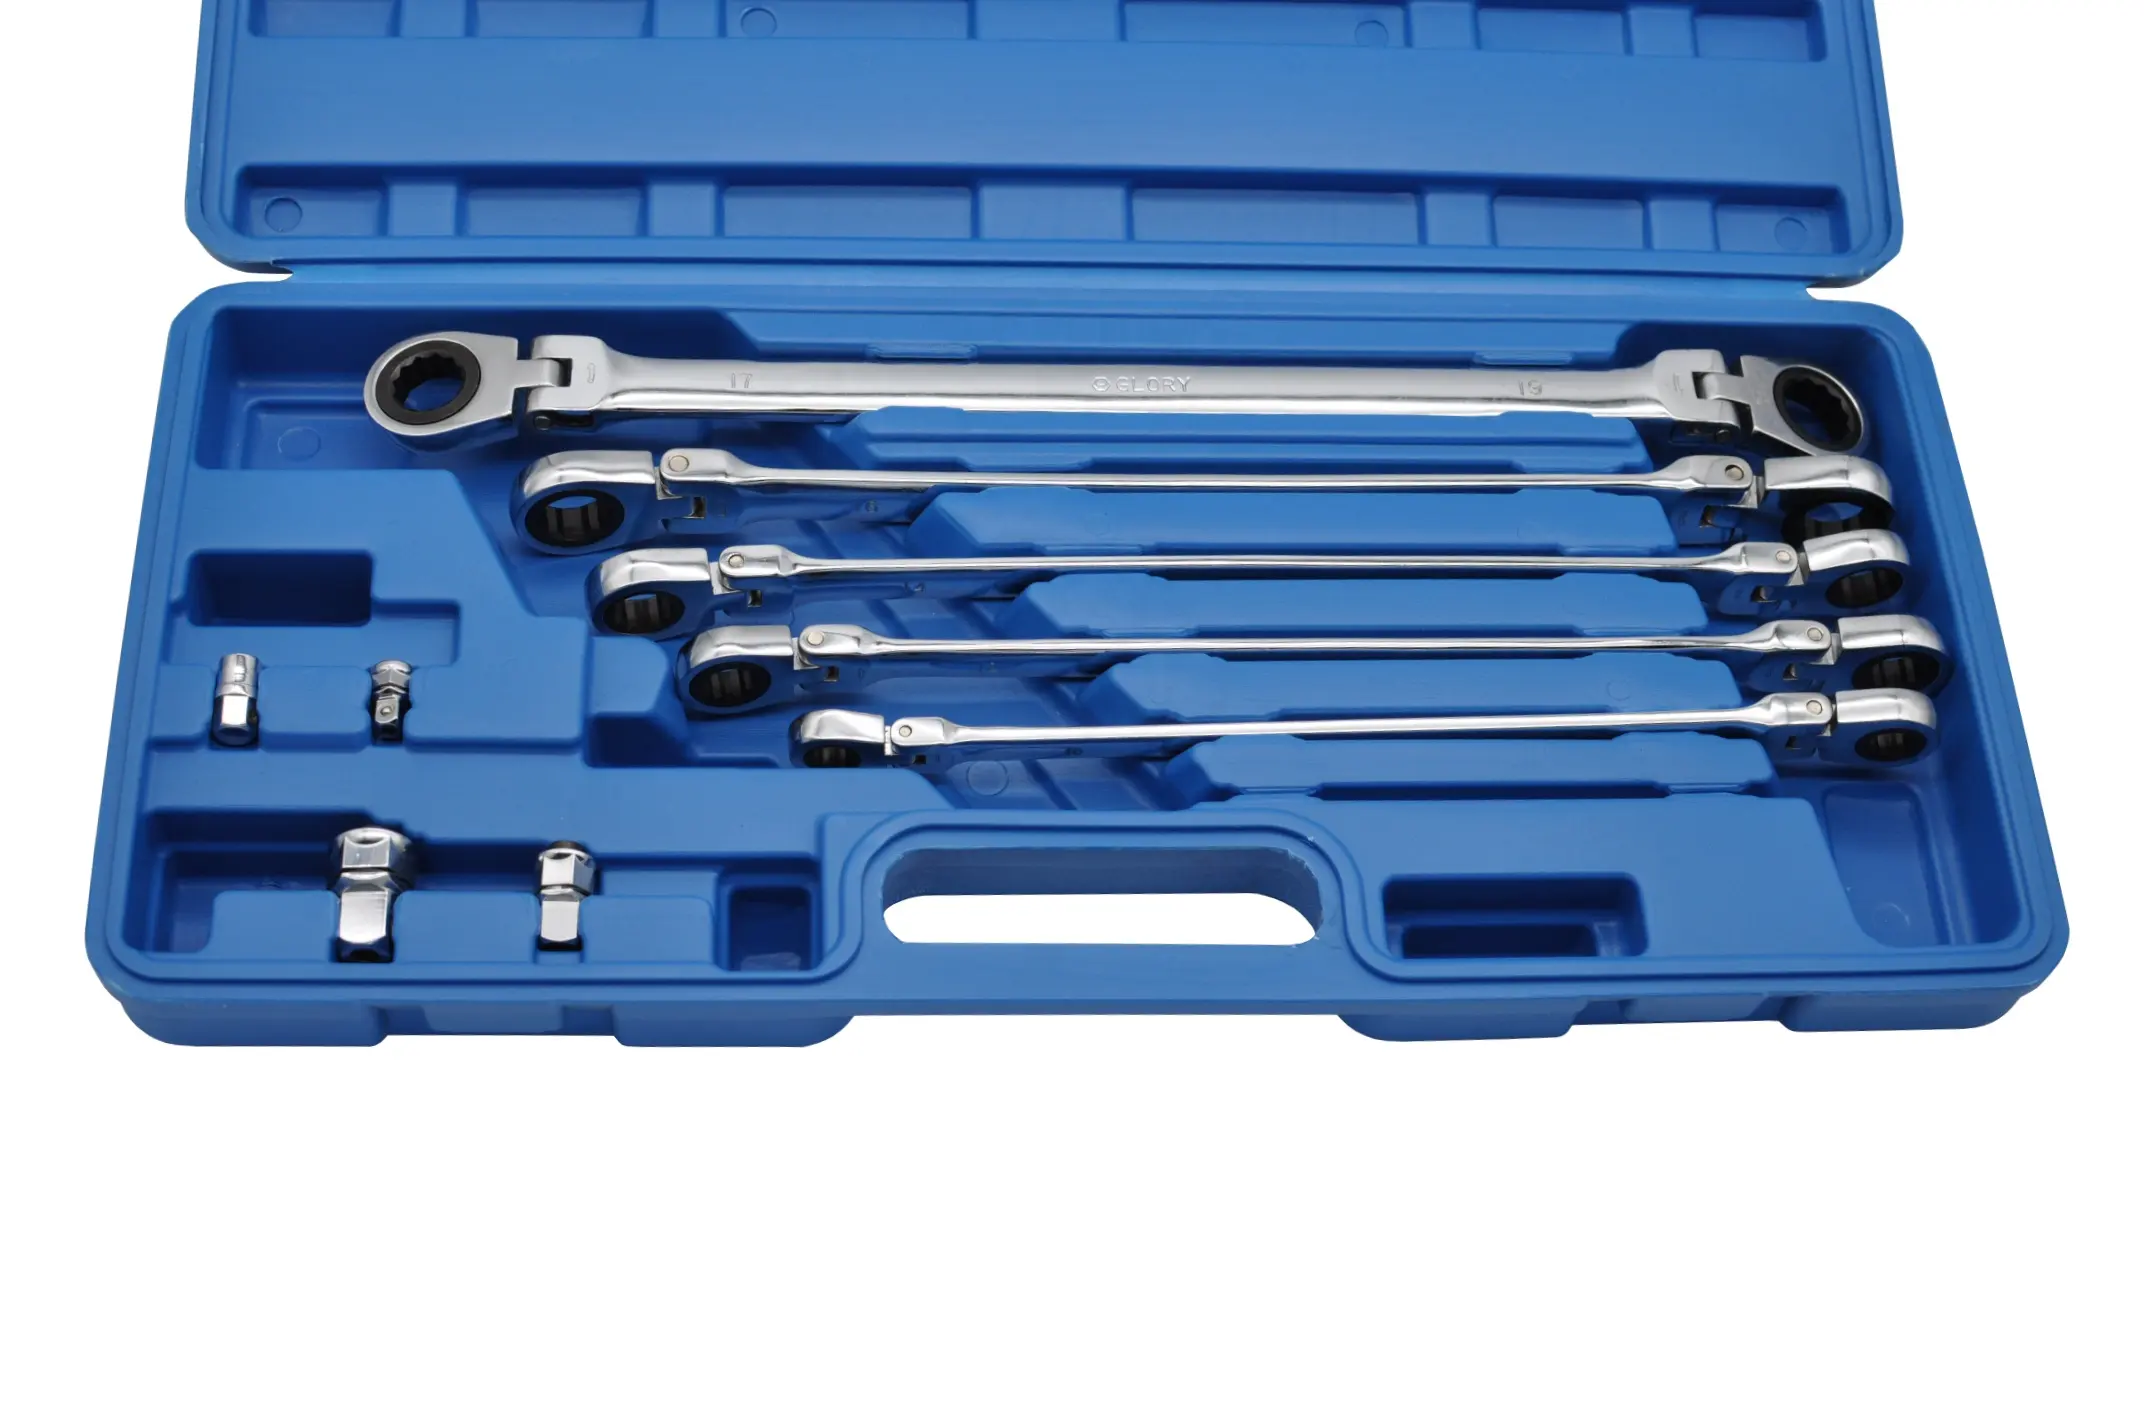 10PCS flexible head combination wrench/ ratchet wrench sets combination ratchet spanner